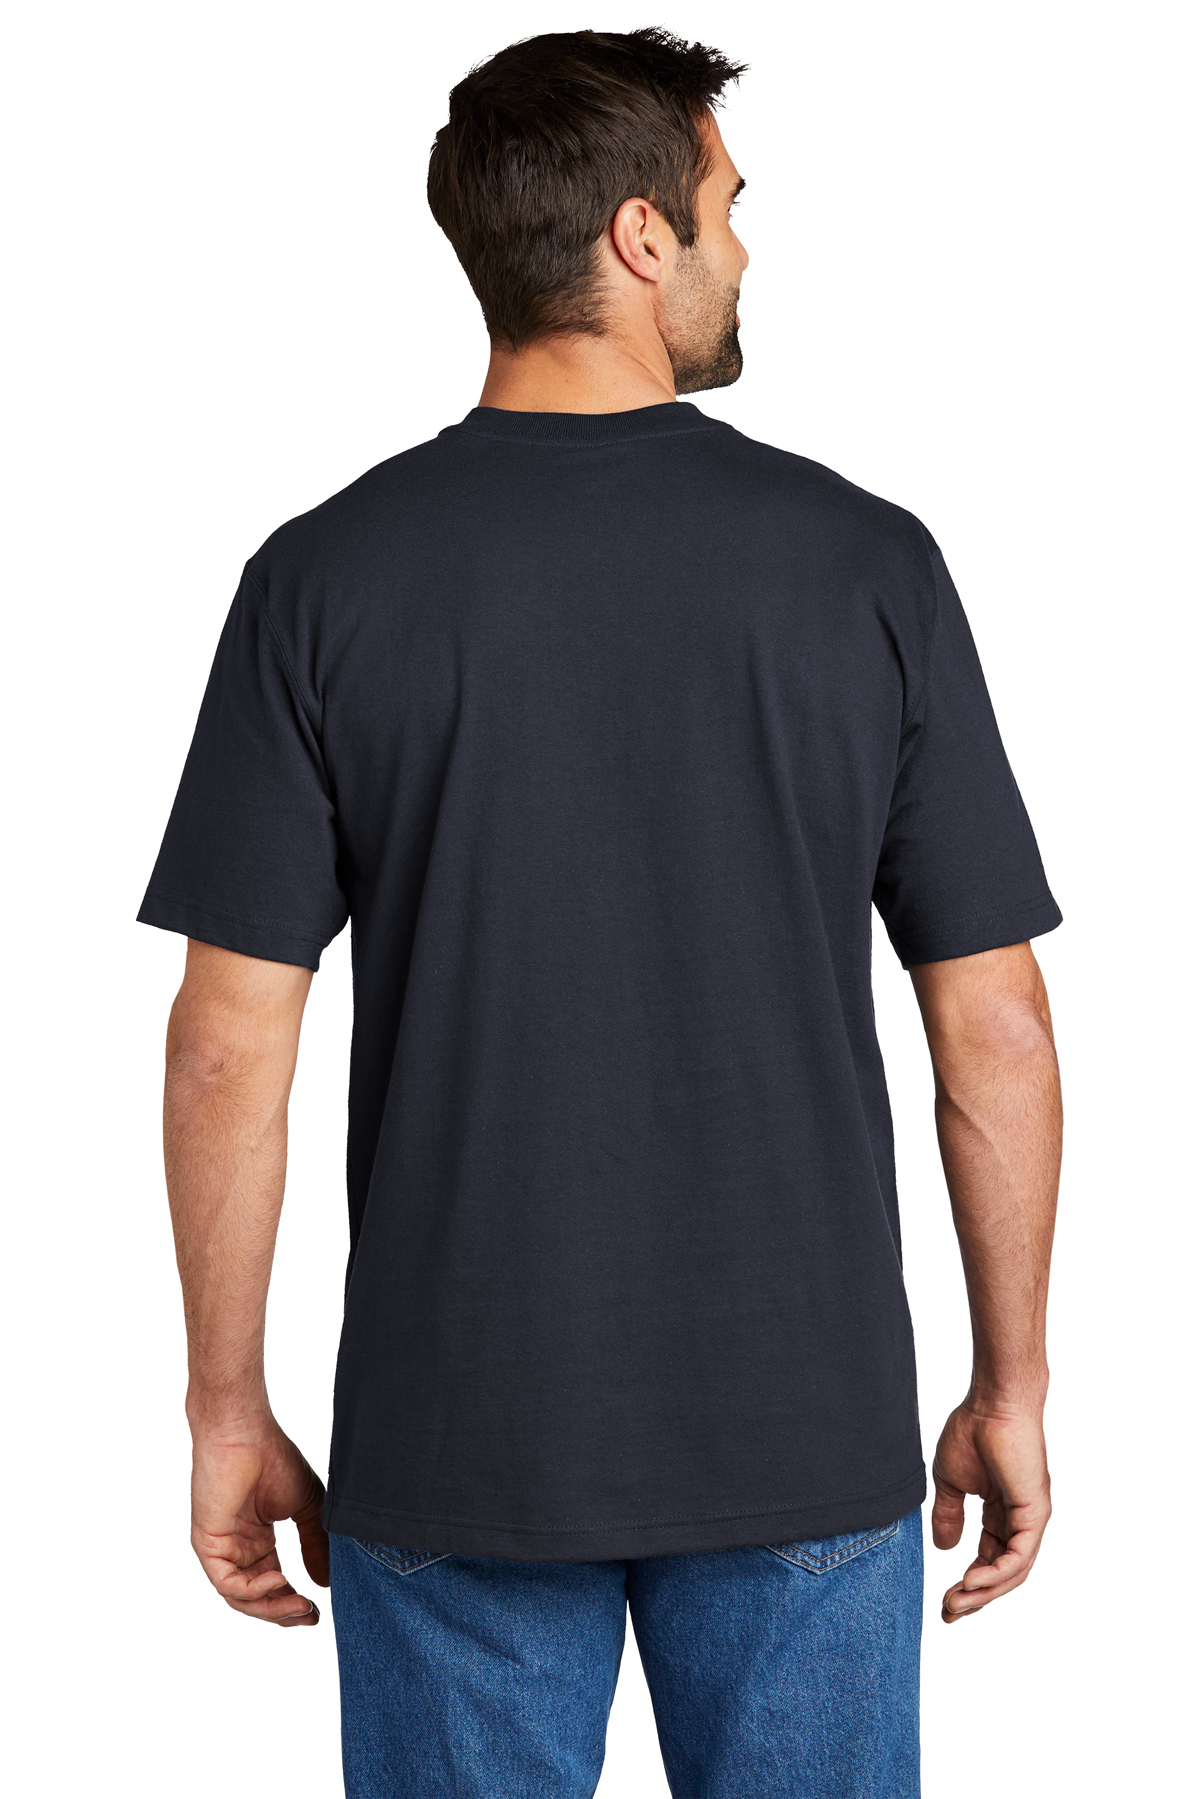 Carhartt T-Shirt SanMar Sleeve Henley | | Short Product